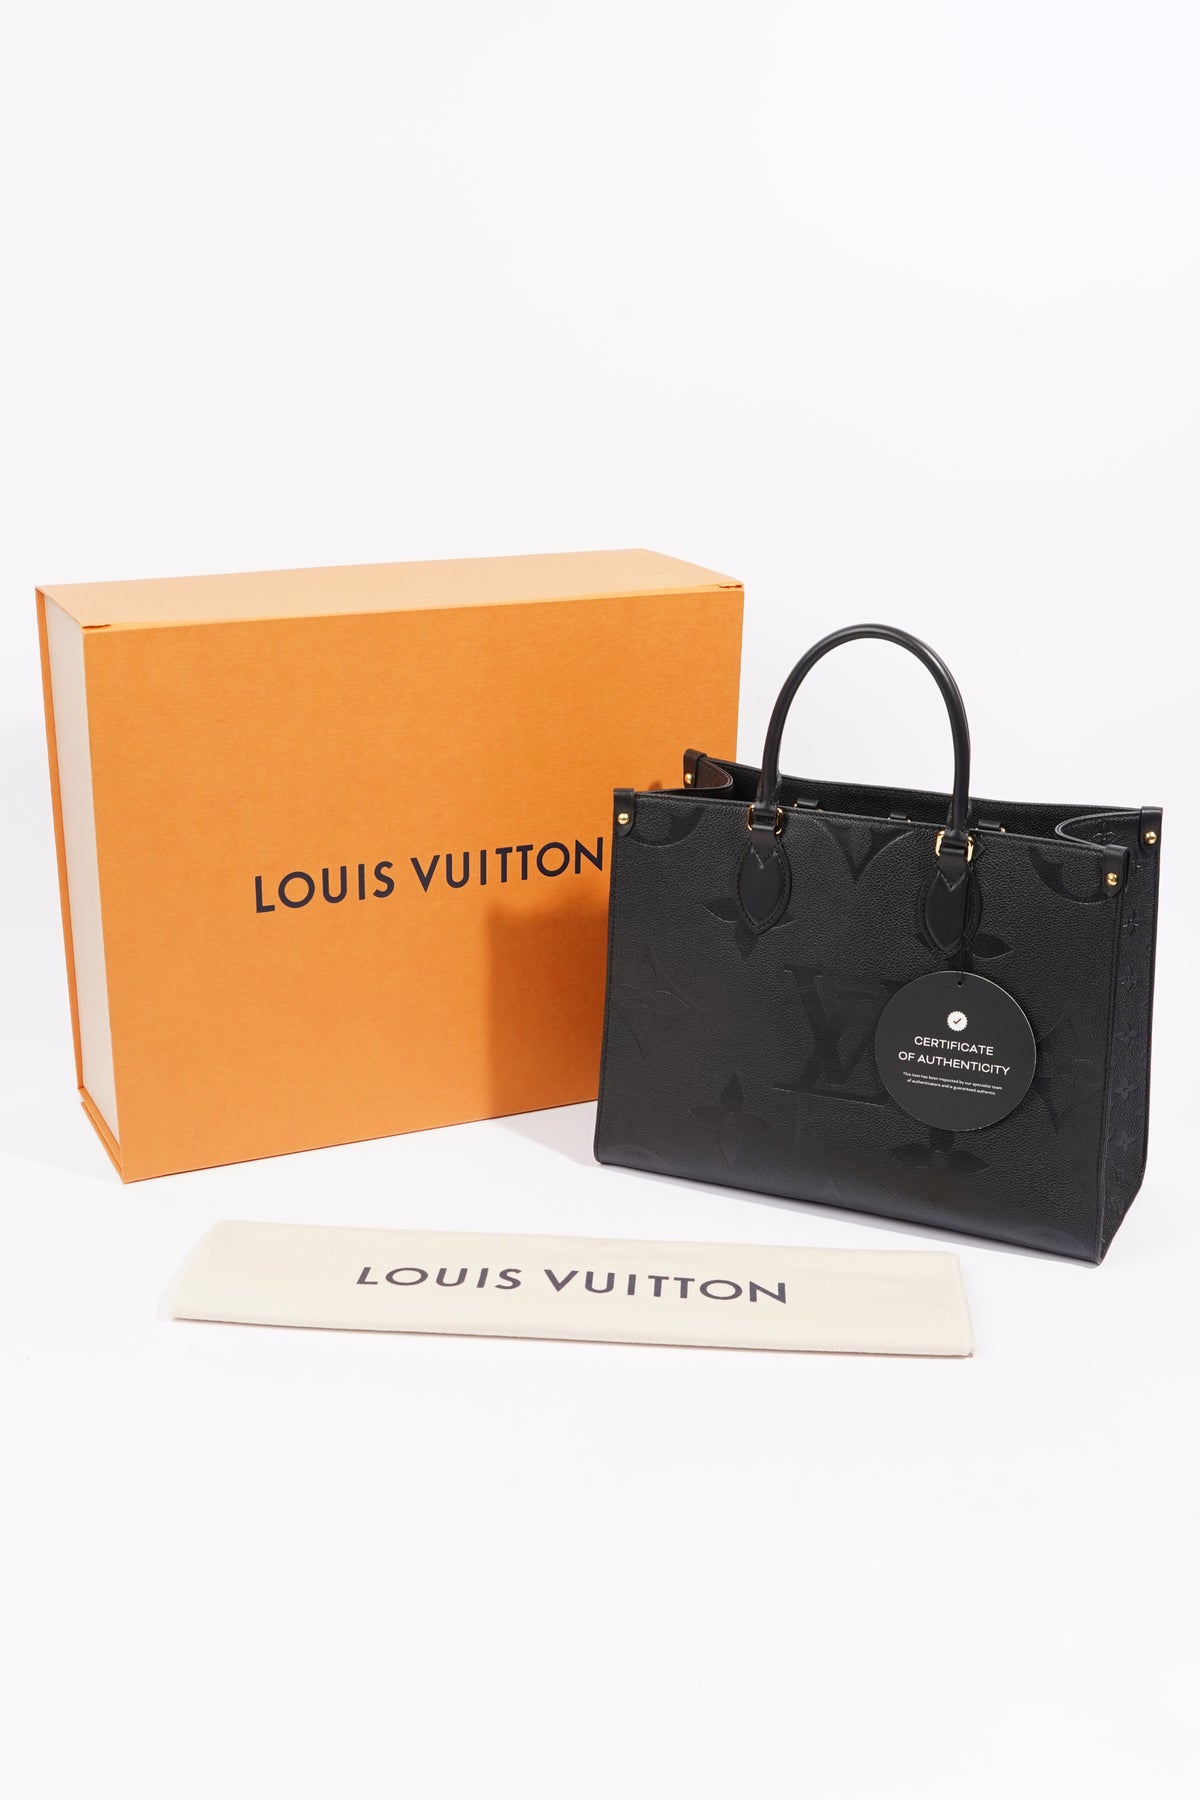 Louis Vuitton Empreinte Onthego